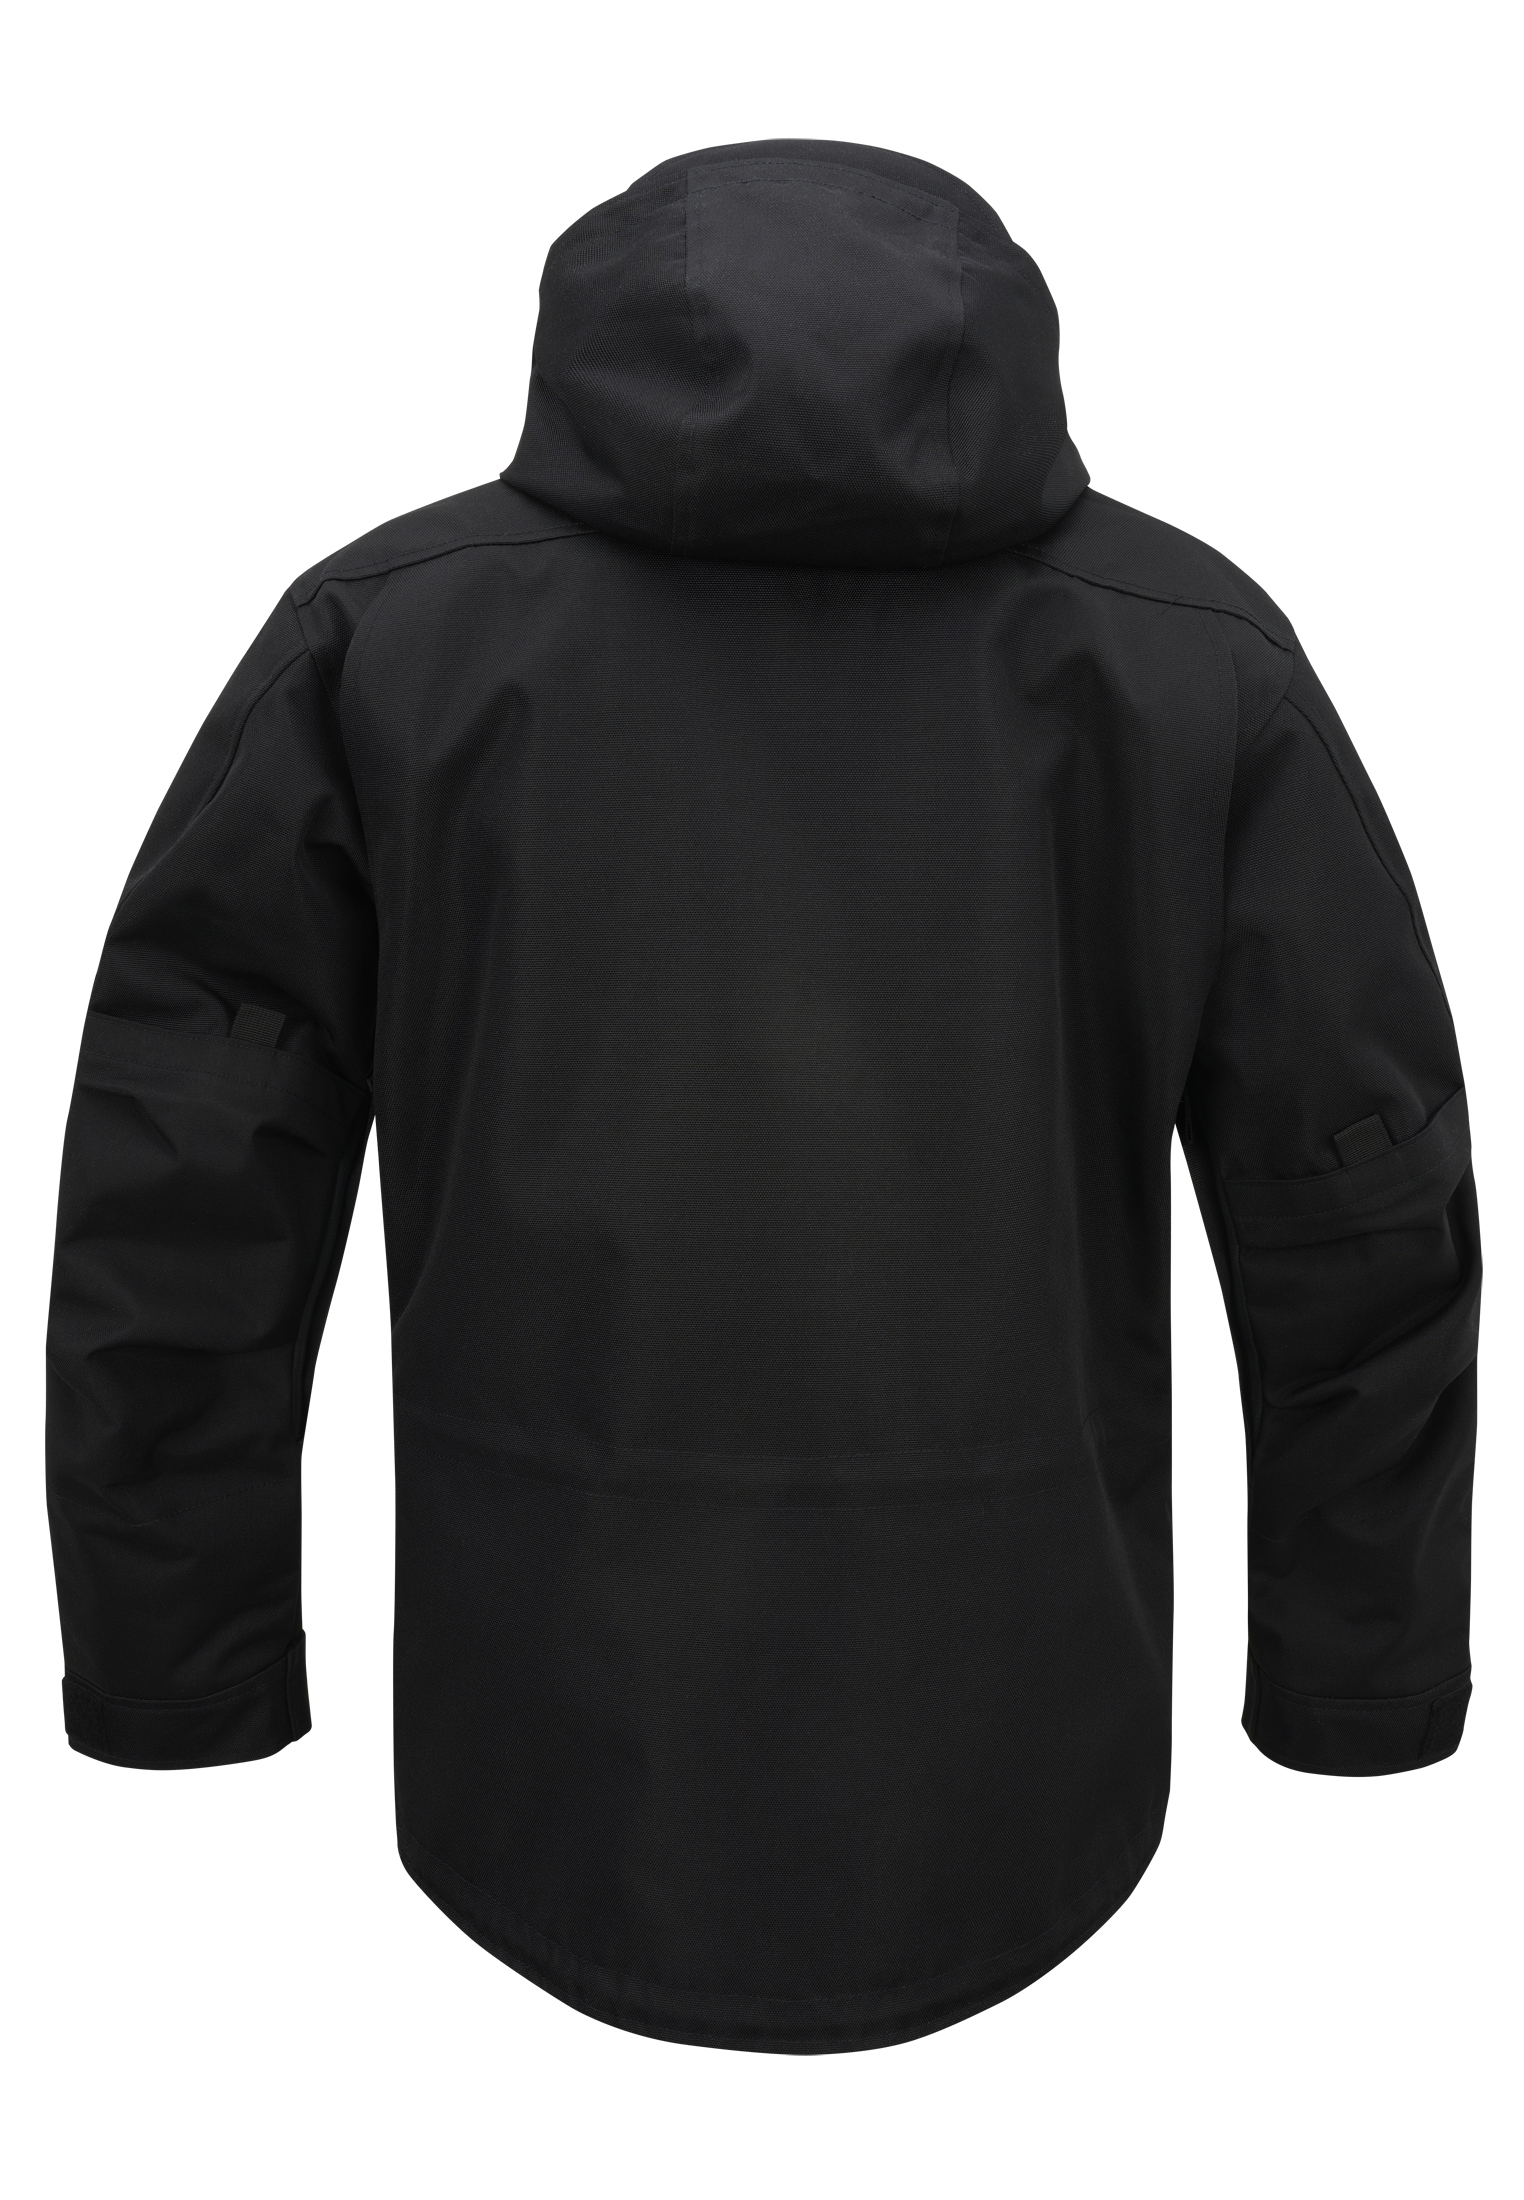 Jacken Performance Outdoorjacket in Farbe black